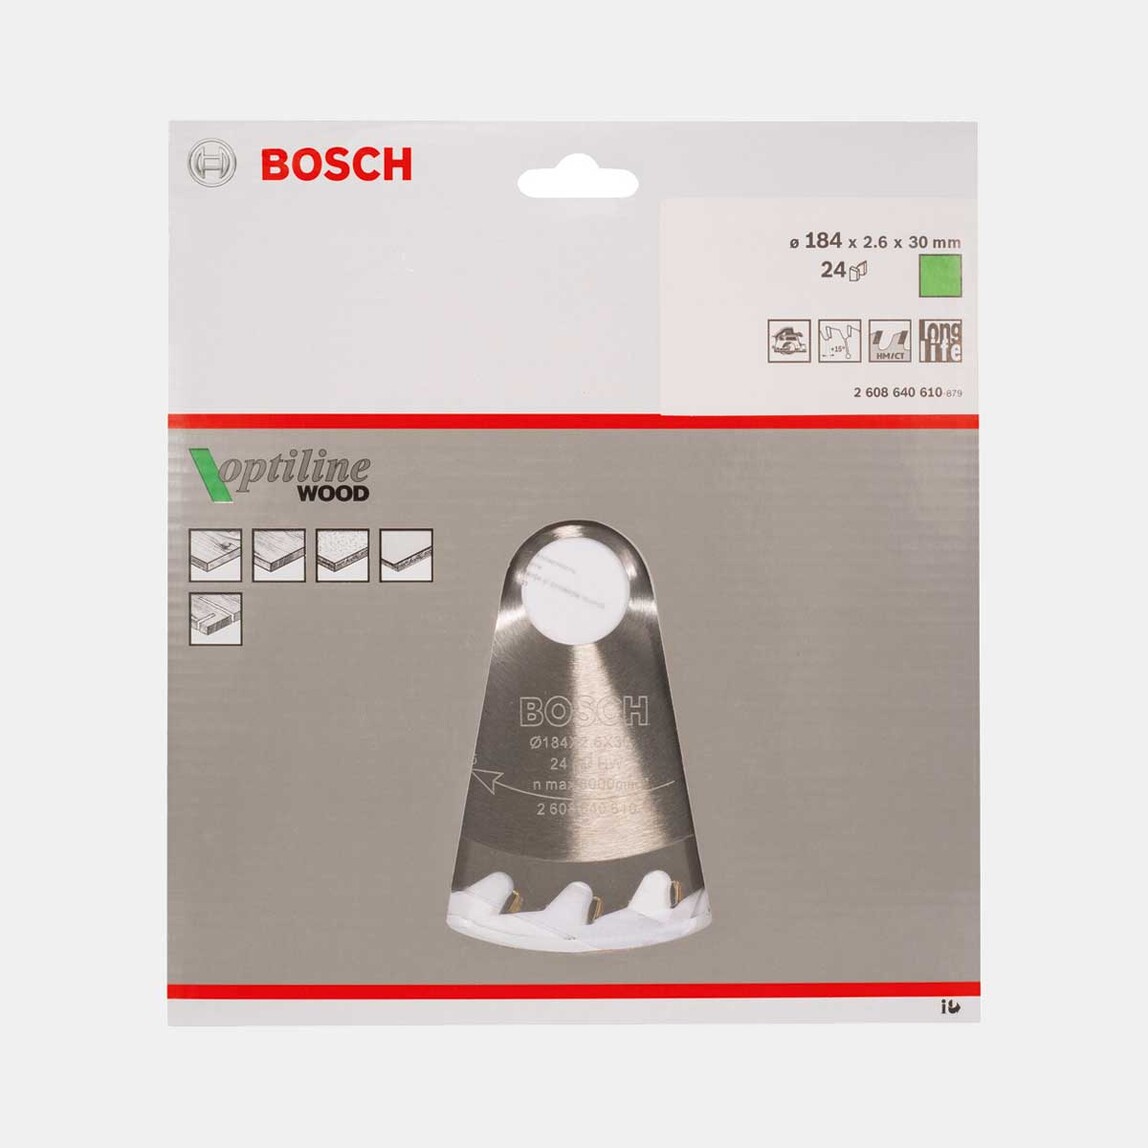    Bosch Optiline Daire Testere Bıçağı  184X30 mm  24 Diş  